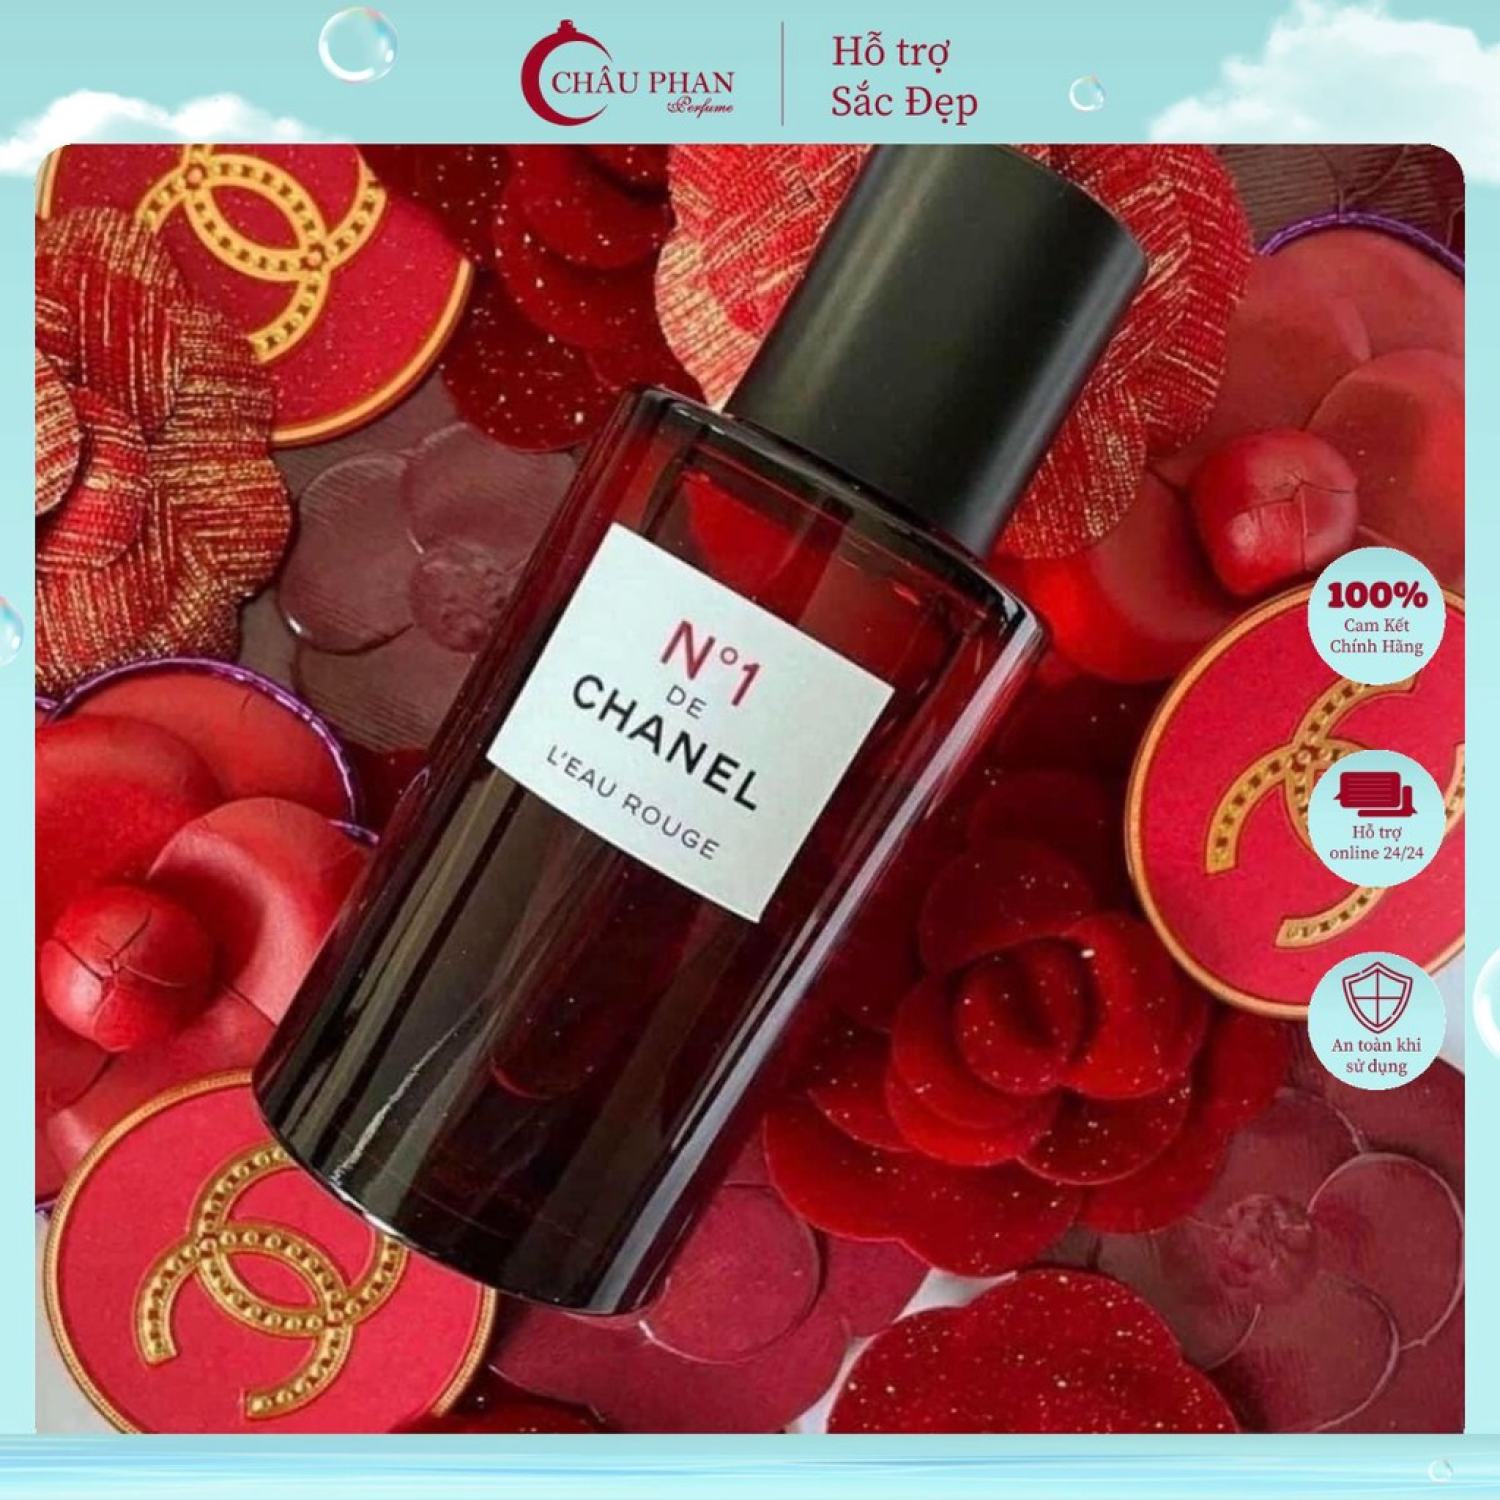 Nước hoa Chanel No 1 de ChaneI LEau Rouge  Mùi hương của Skin care    Shopee Việt Nam